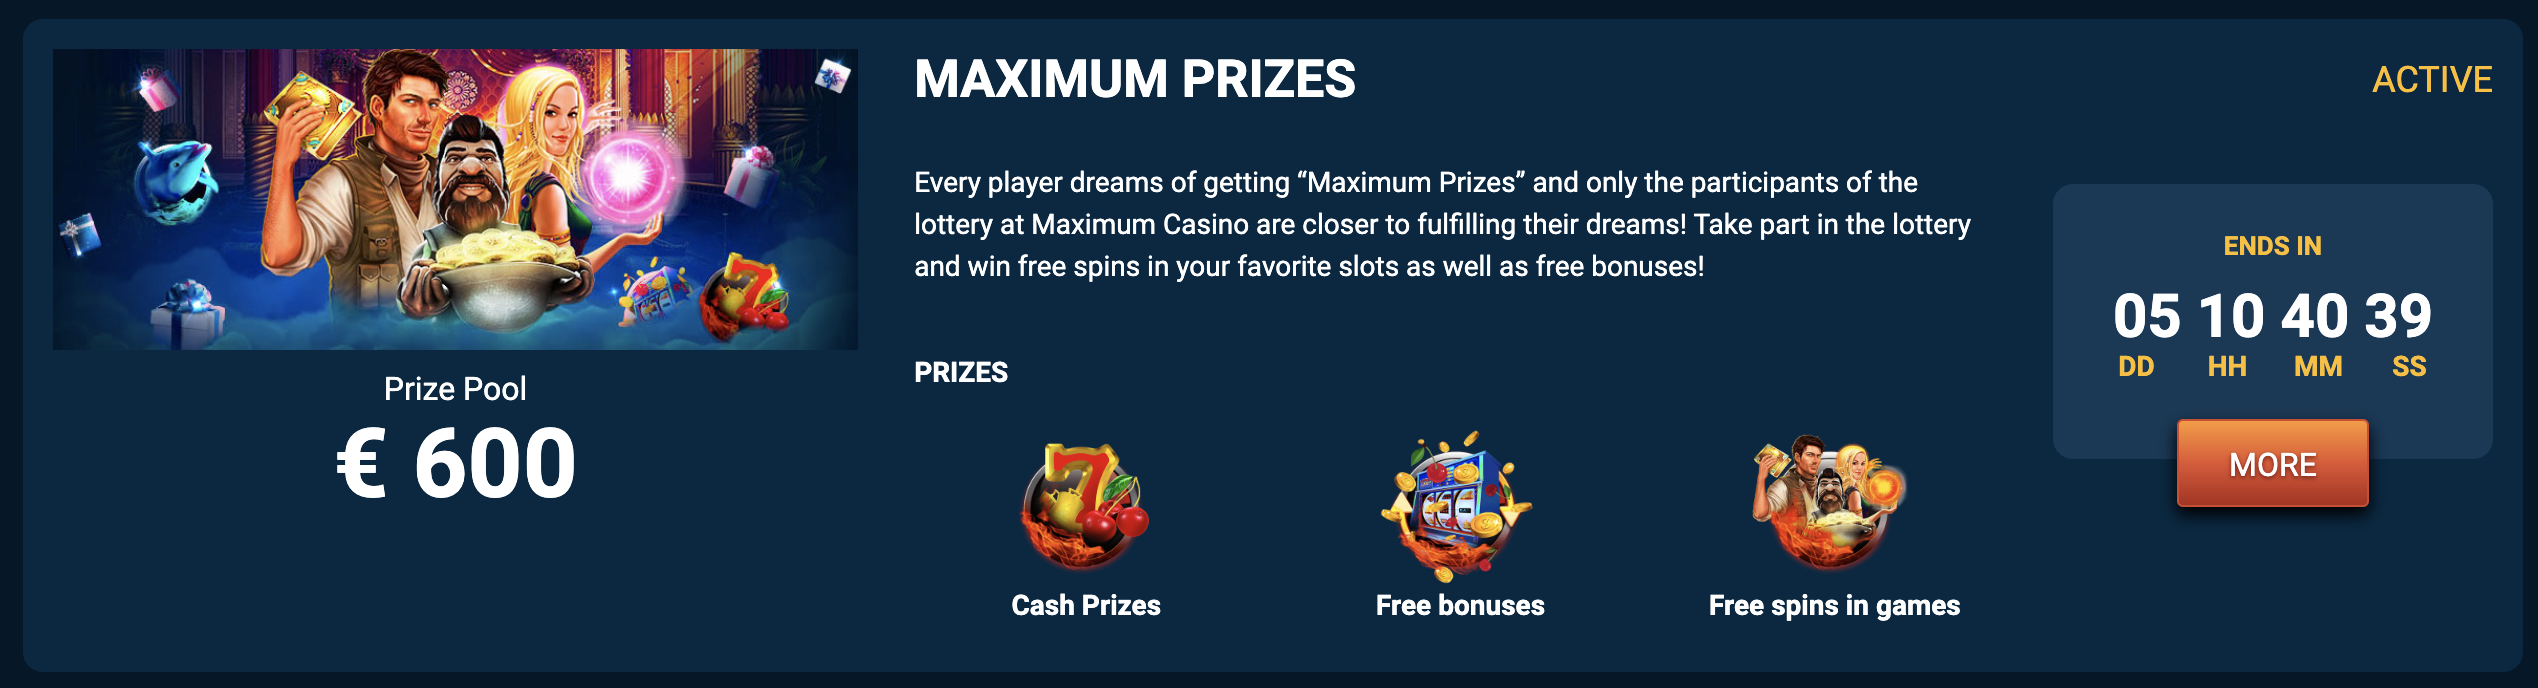 Lotteries at Maximum Casino